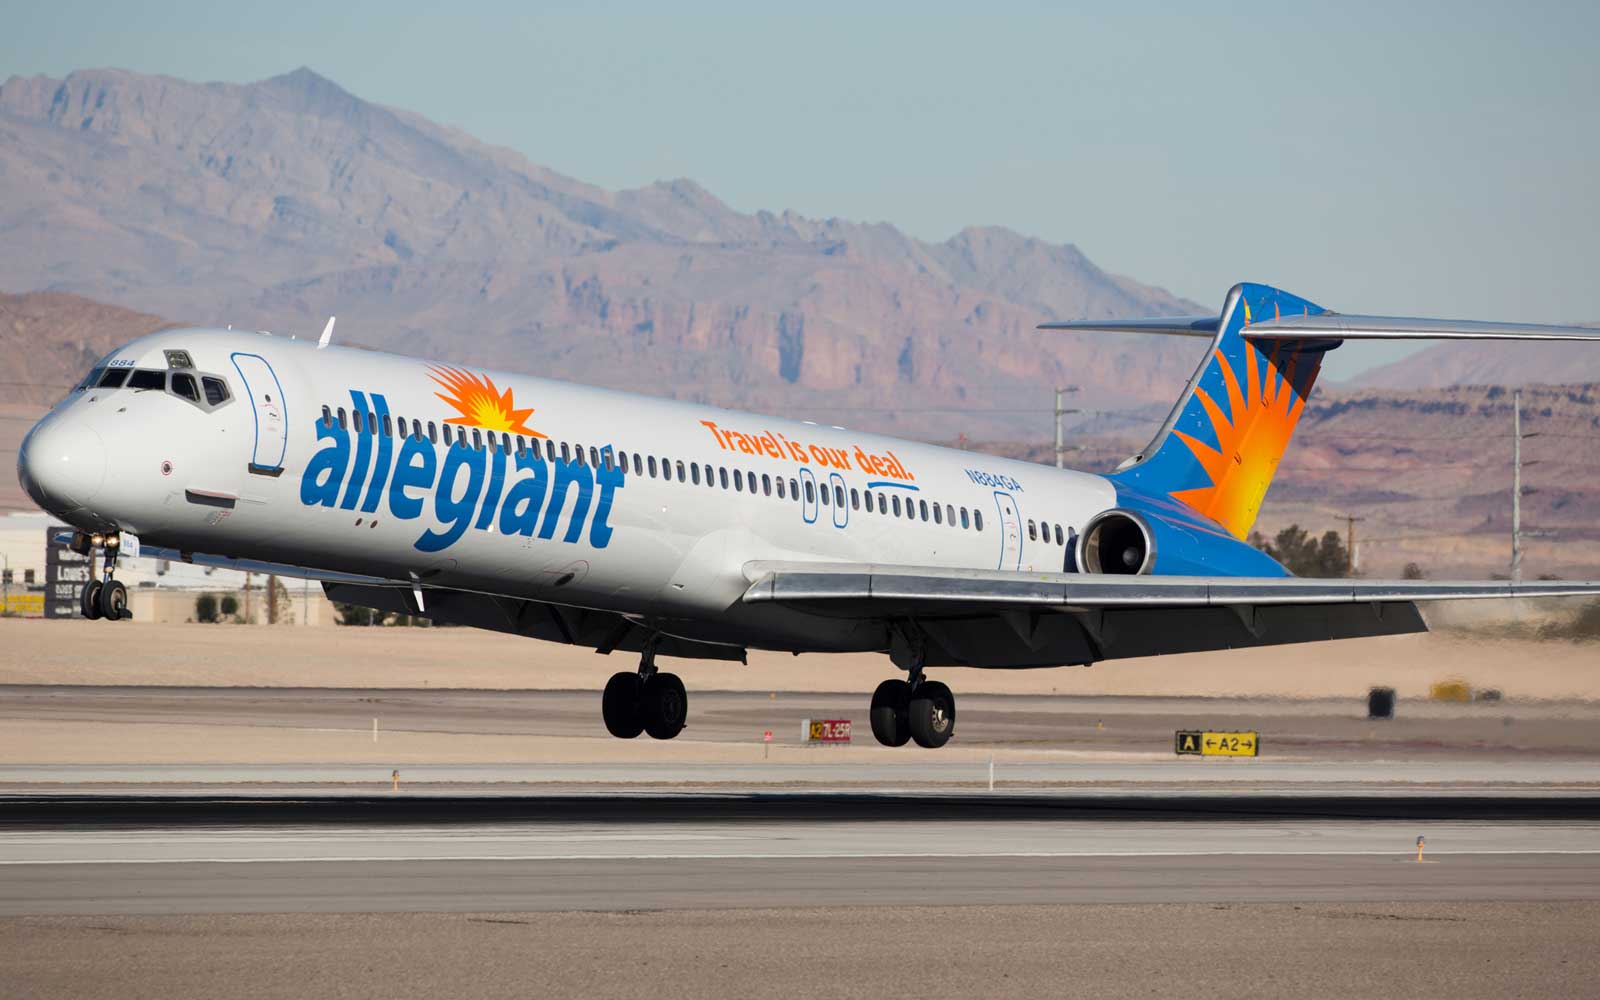 Allegiant Air bolsters its domestic flight schedule